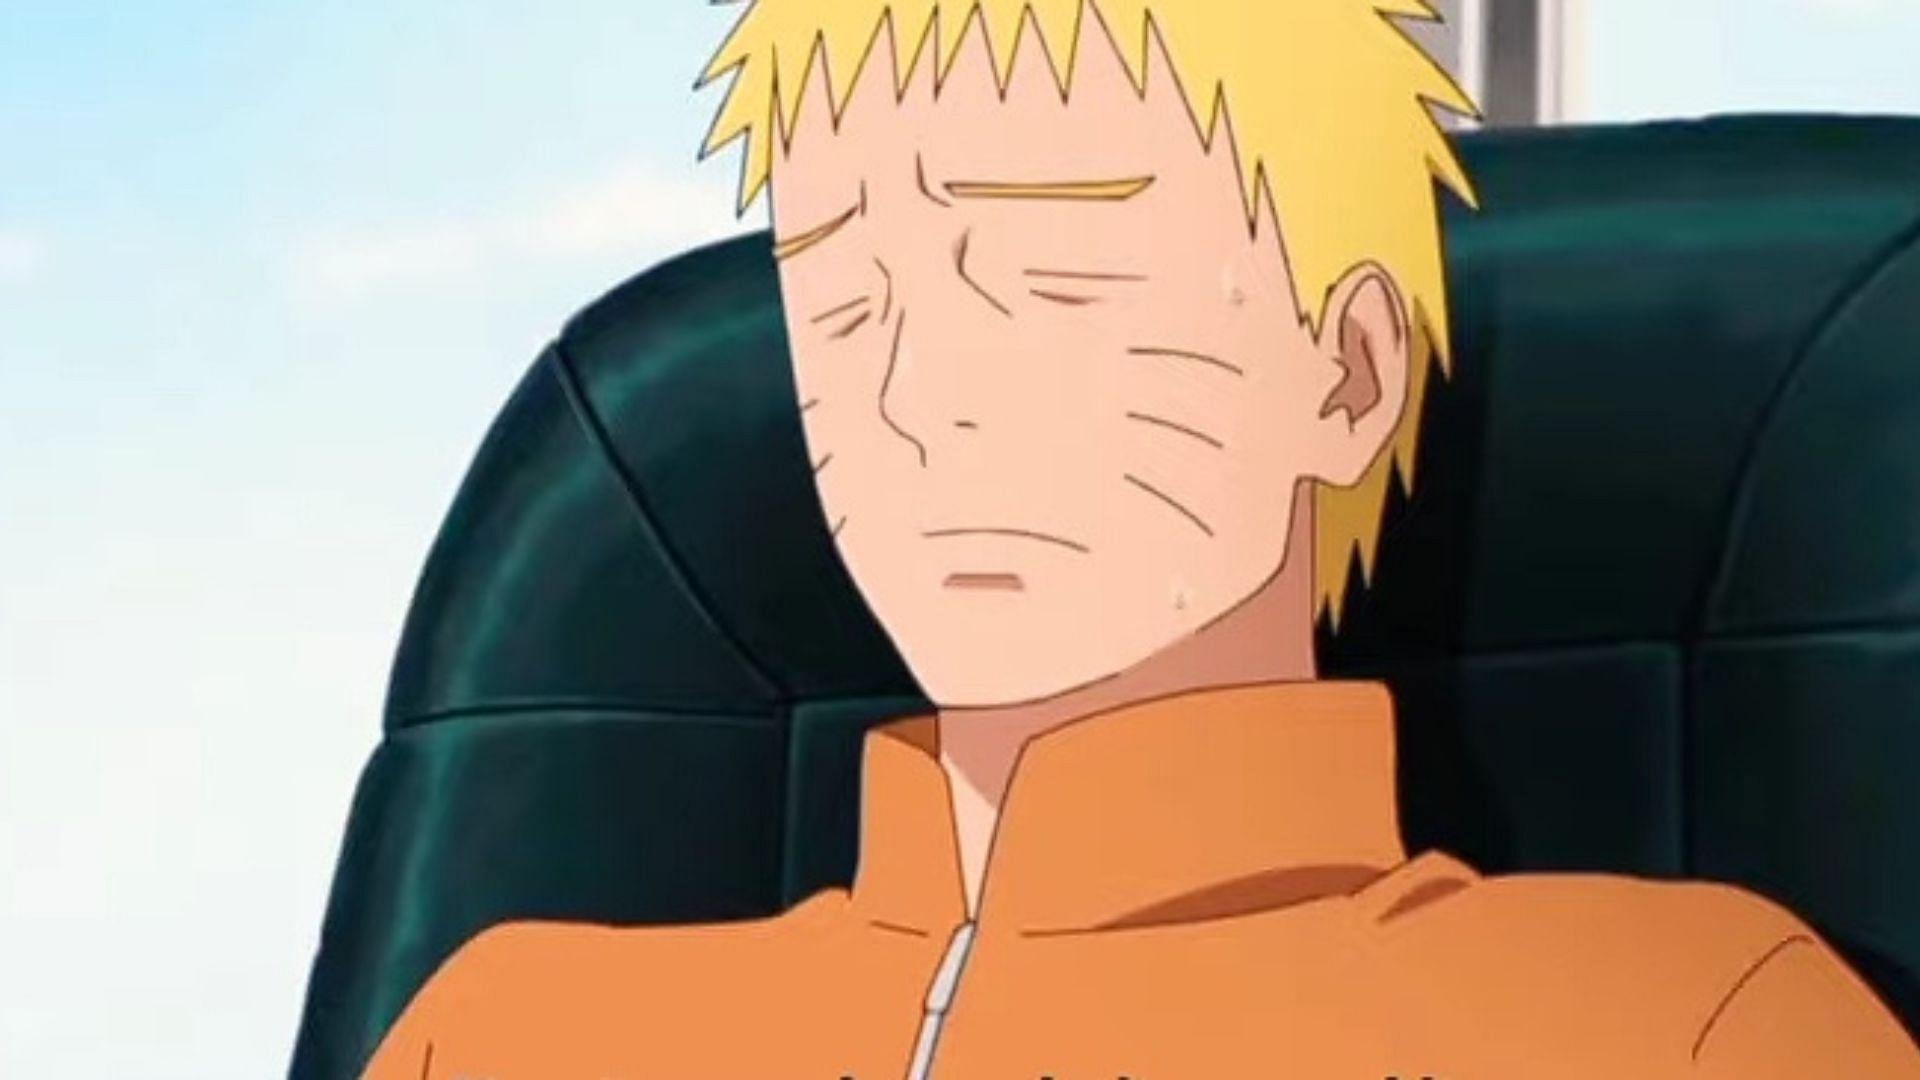 Naruto as seen in the upcoming Boruto episode preview (Image via Studio Pierrot)